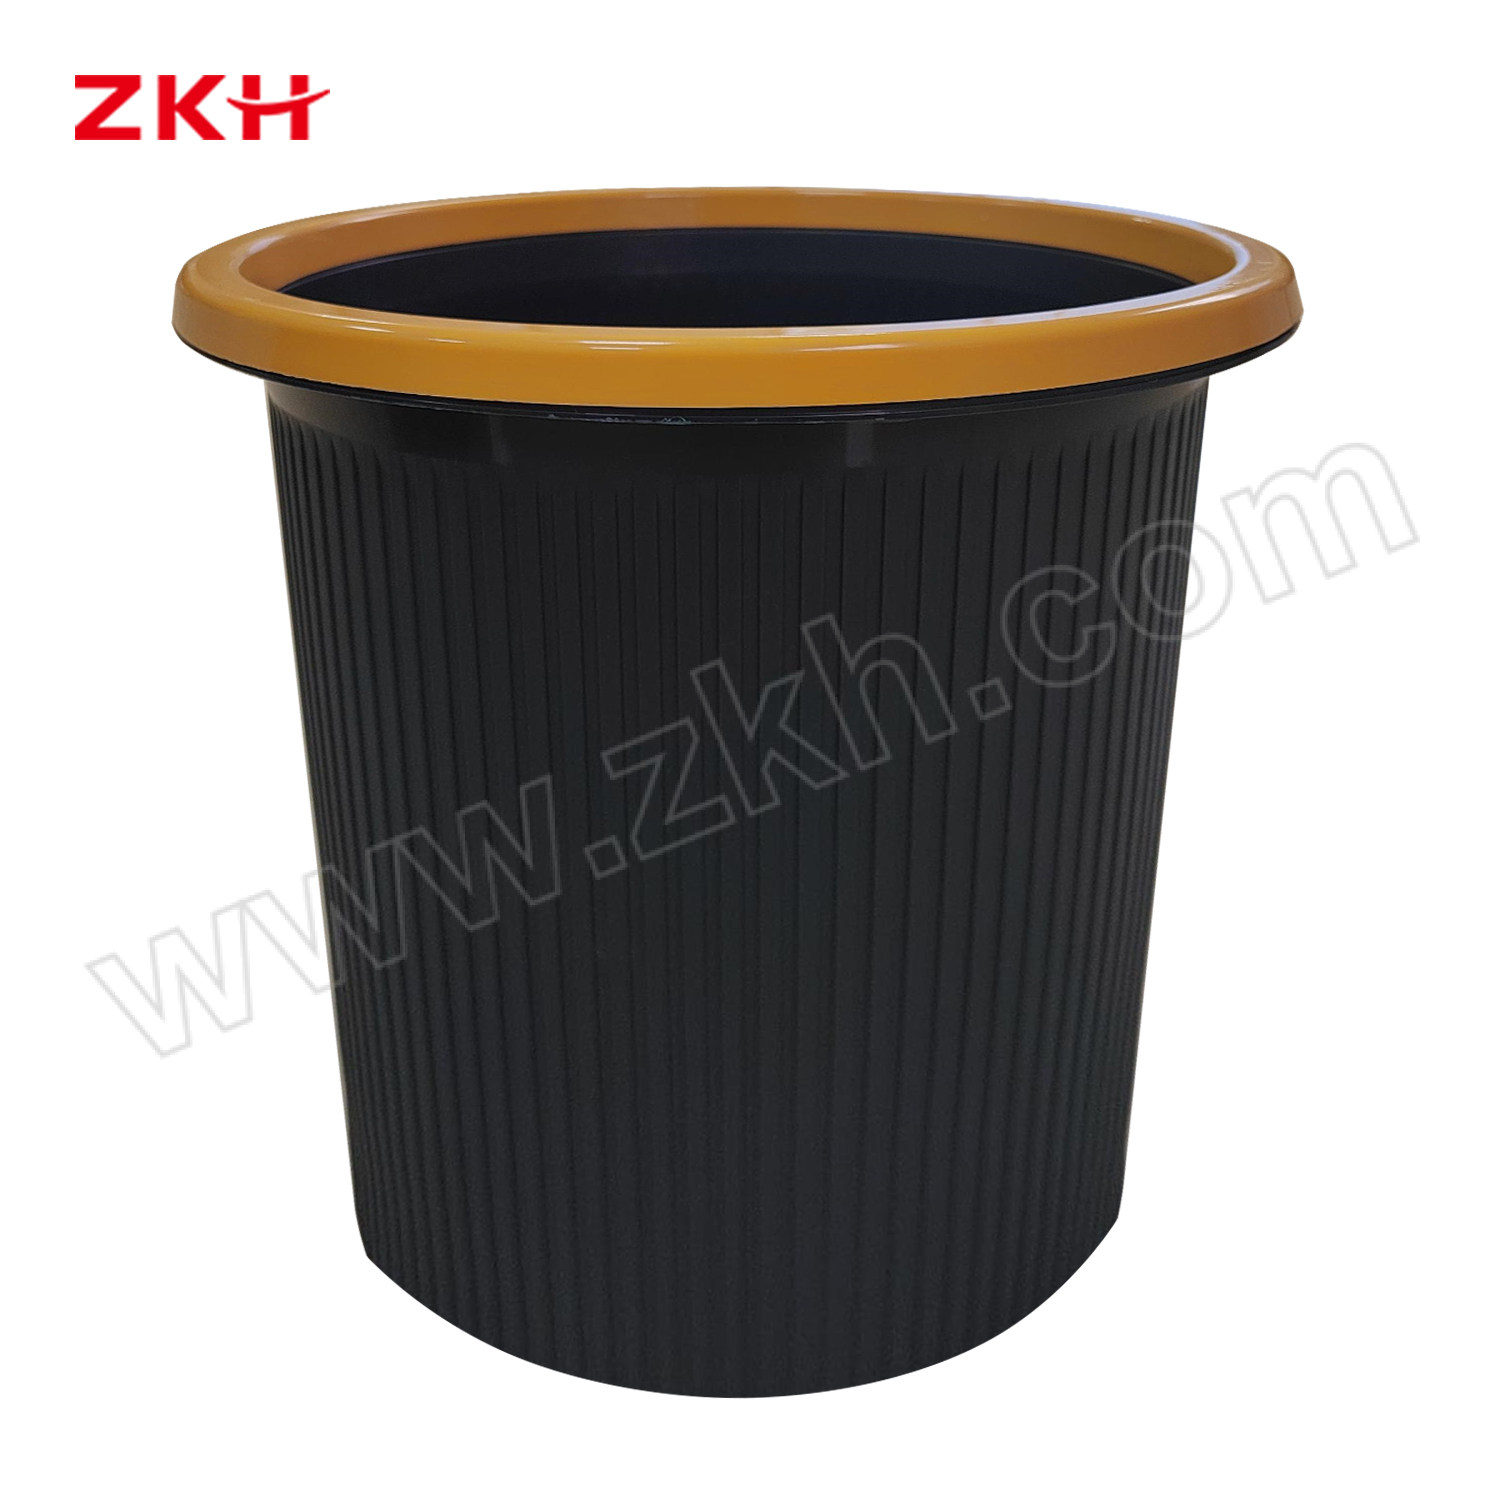 ZKH/震坤行 圆形压圈垃圾桶 ZKH-LJT-SL10L 中号 10L 黑色桶体+橙色压圈 1个